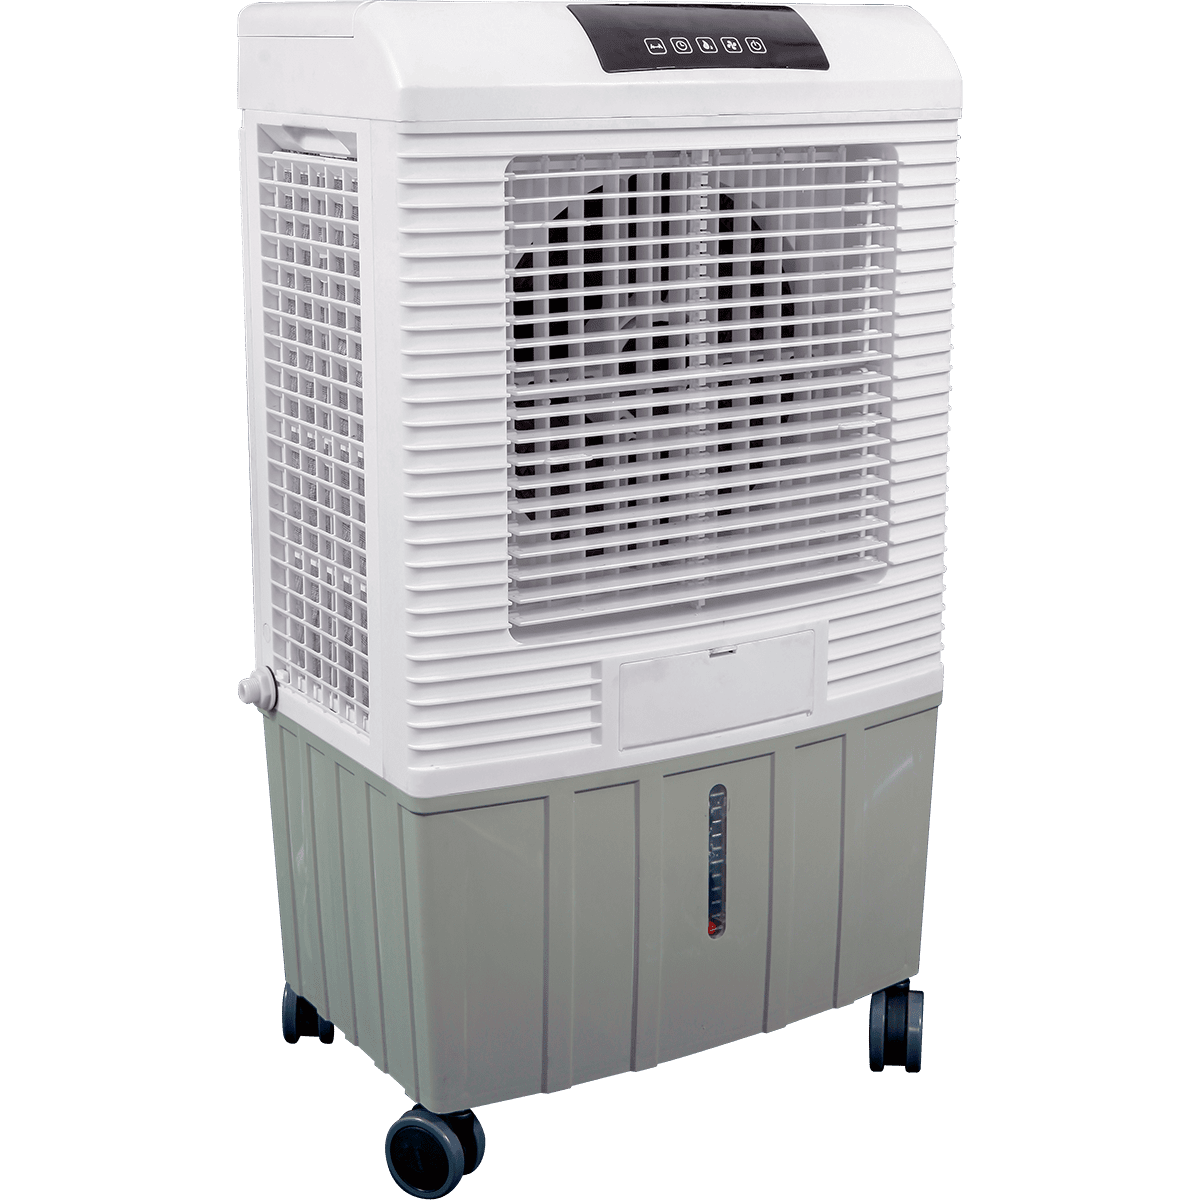 The Hessaire MC26 is a 2,100 CFM portable evaporative swamp cooler that off...